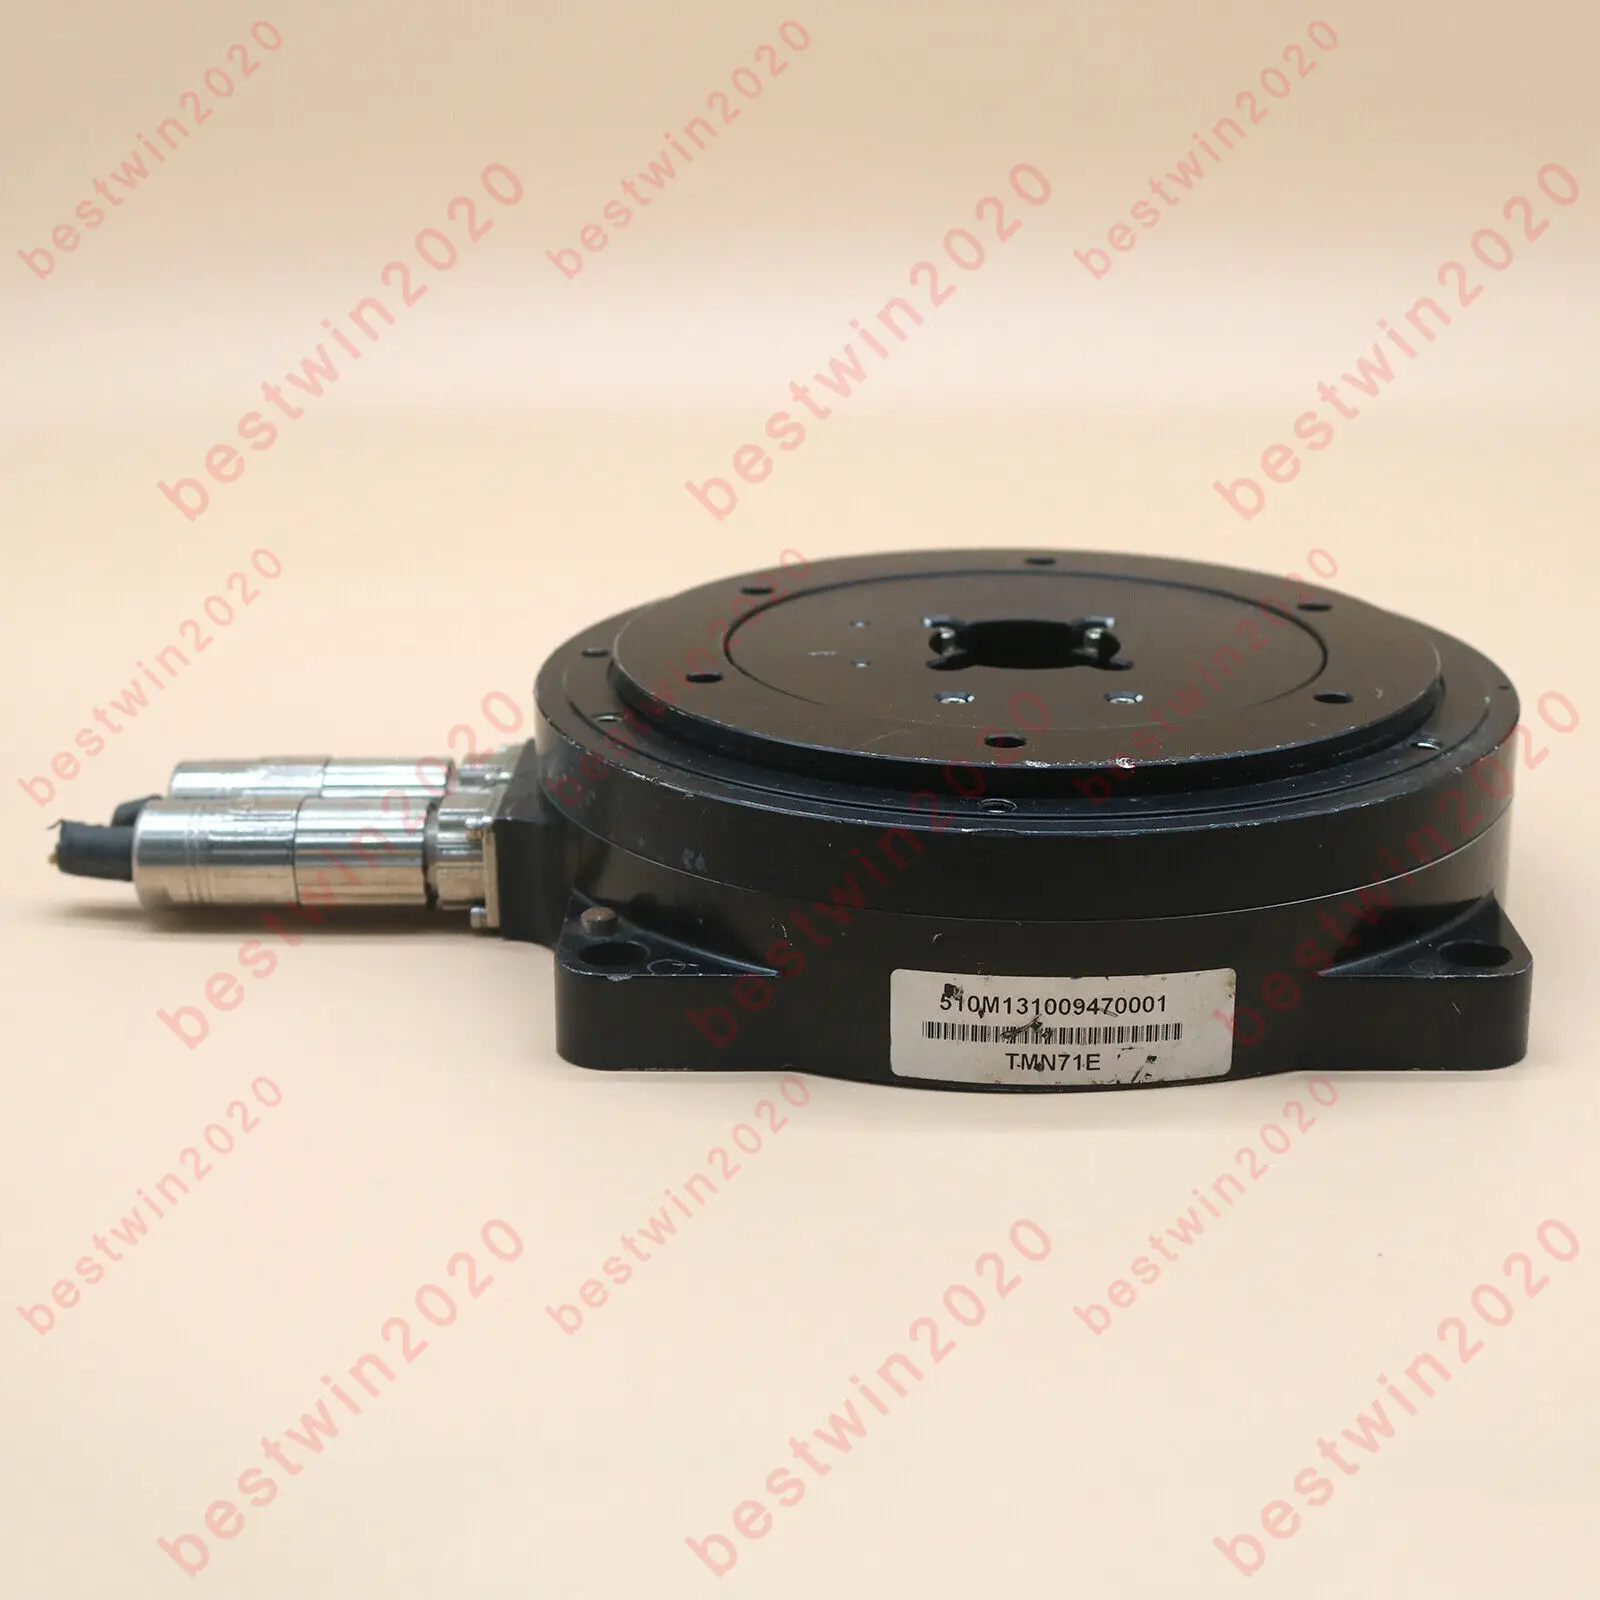 

1PC Used TMN71E DD torque motor rotary tables